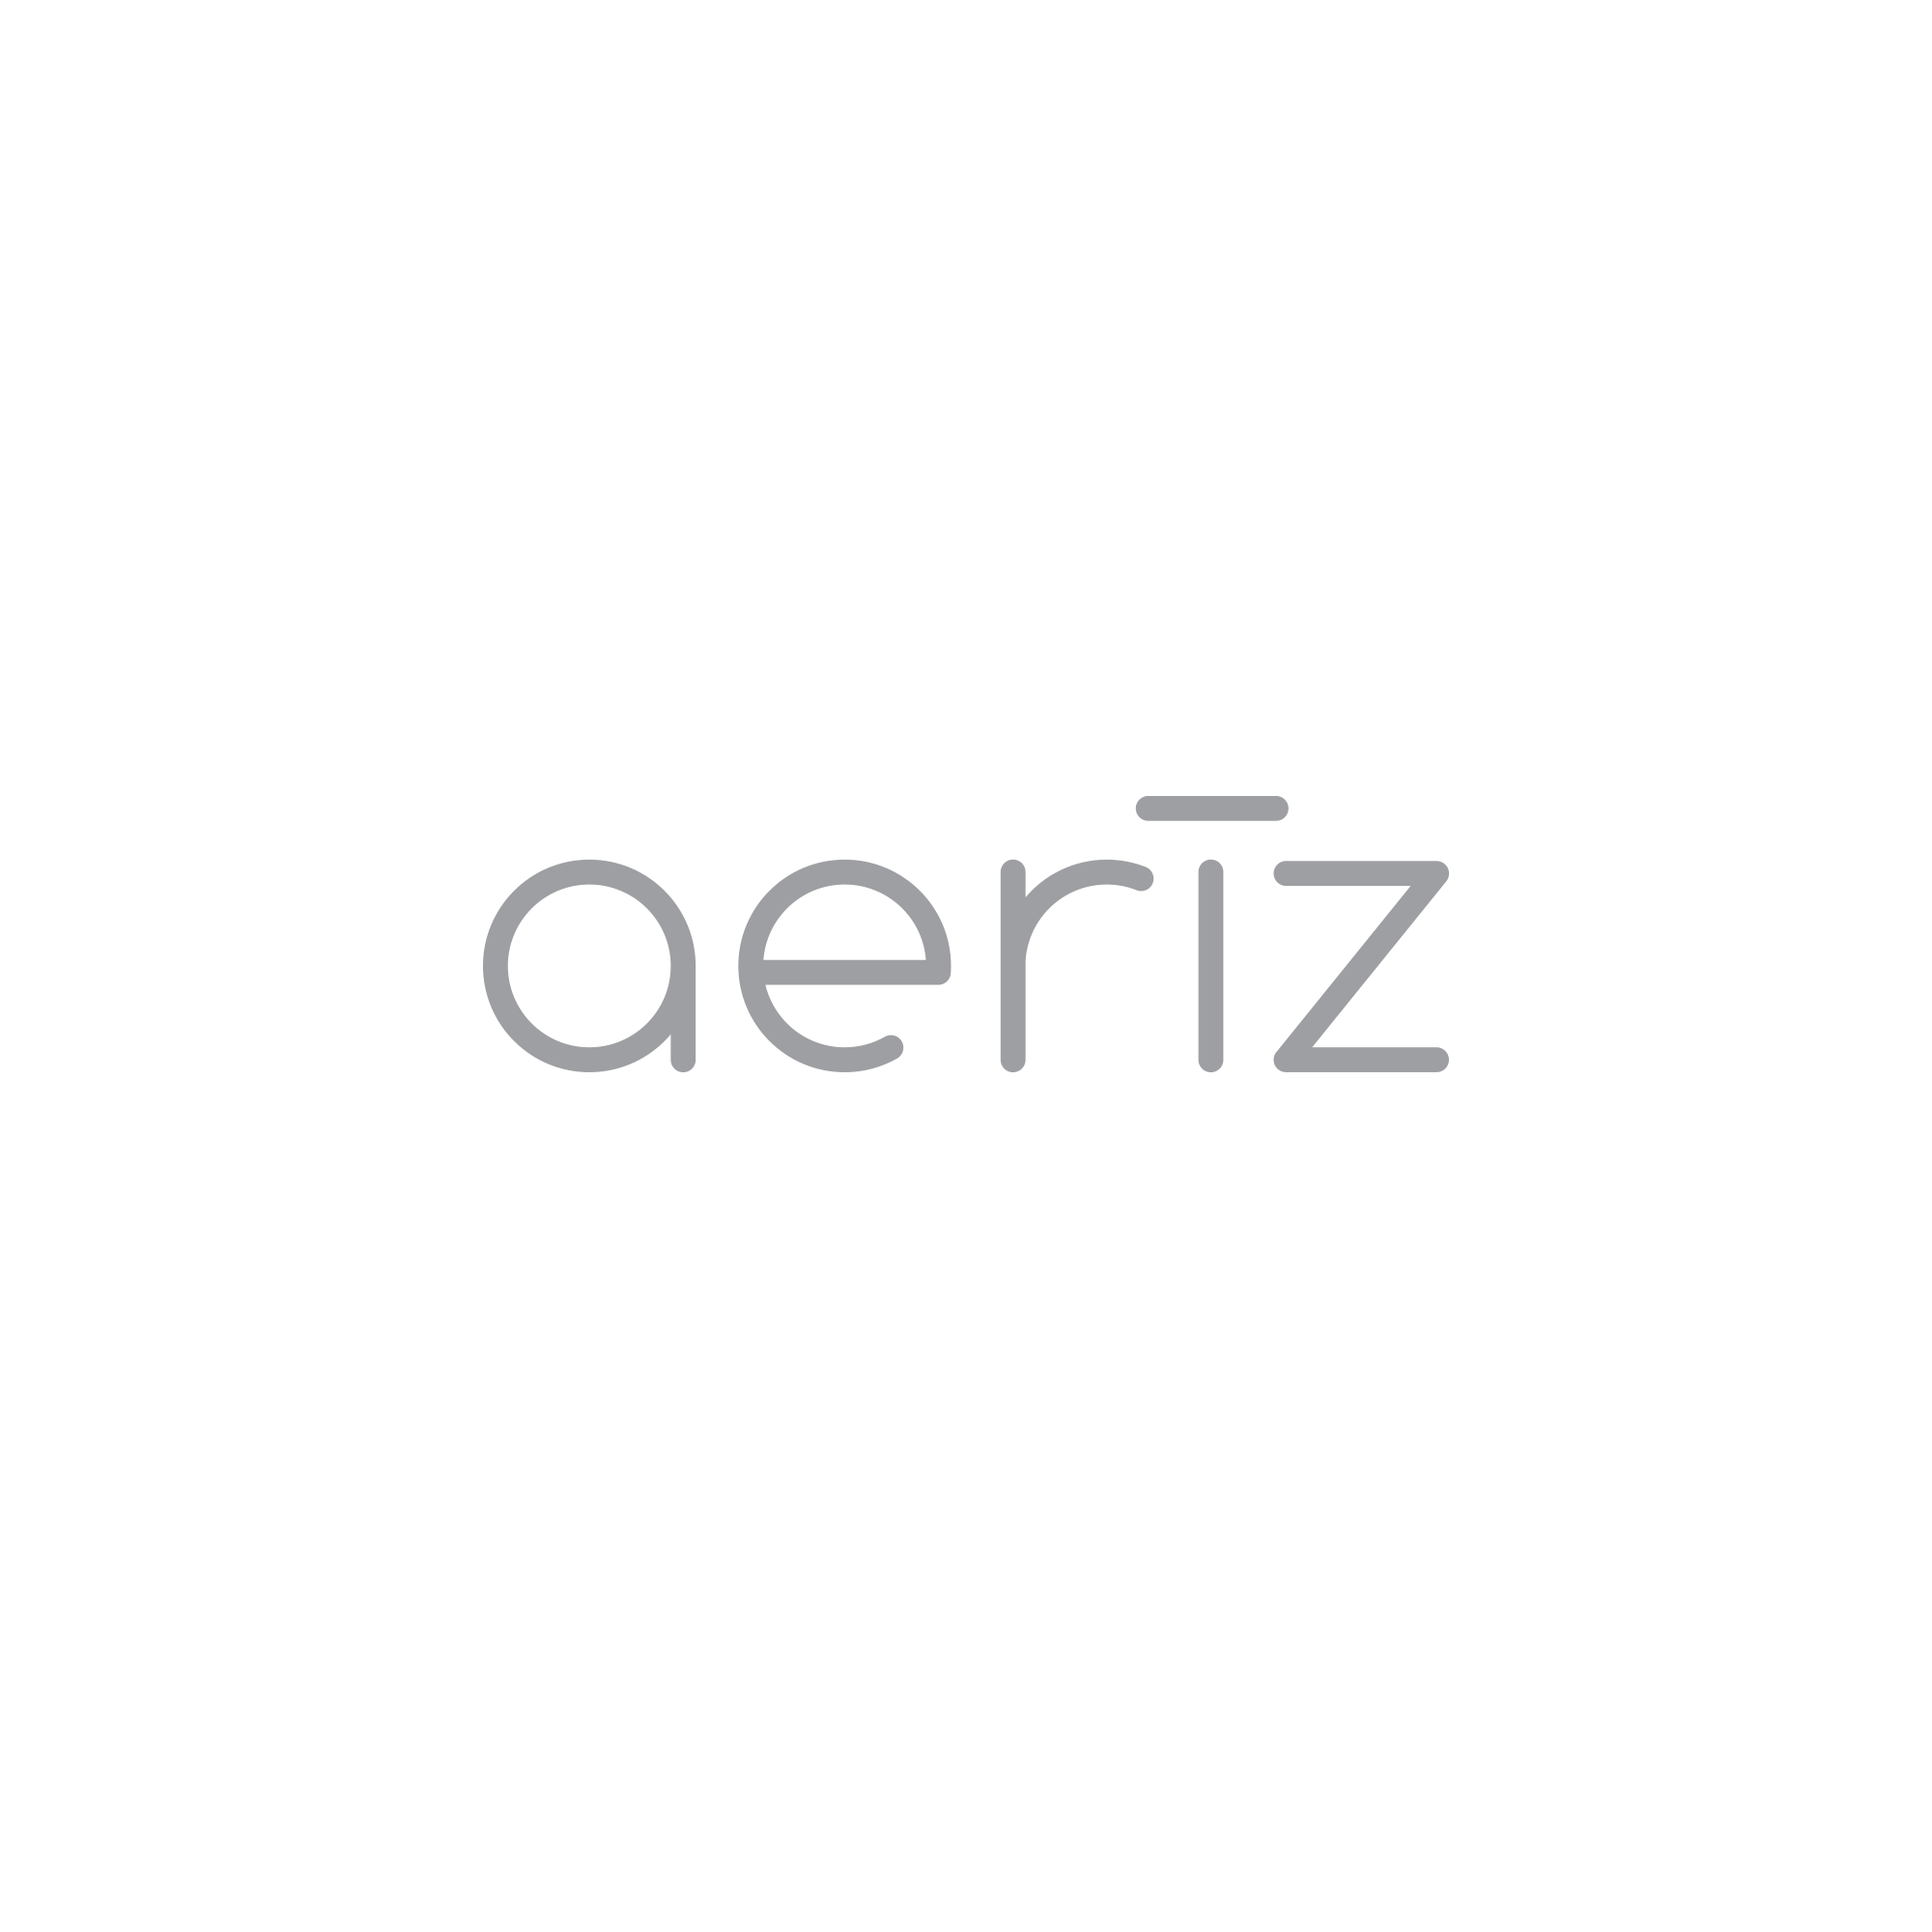 Aeriz_Logo_Single_Gray.png